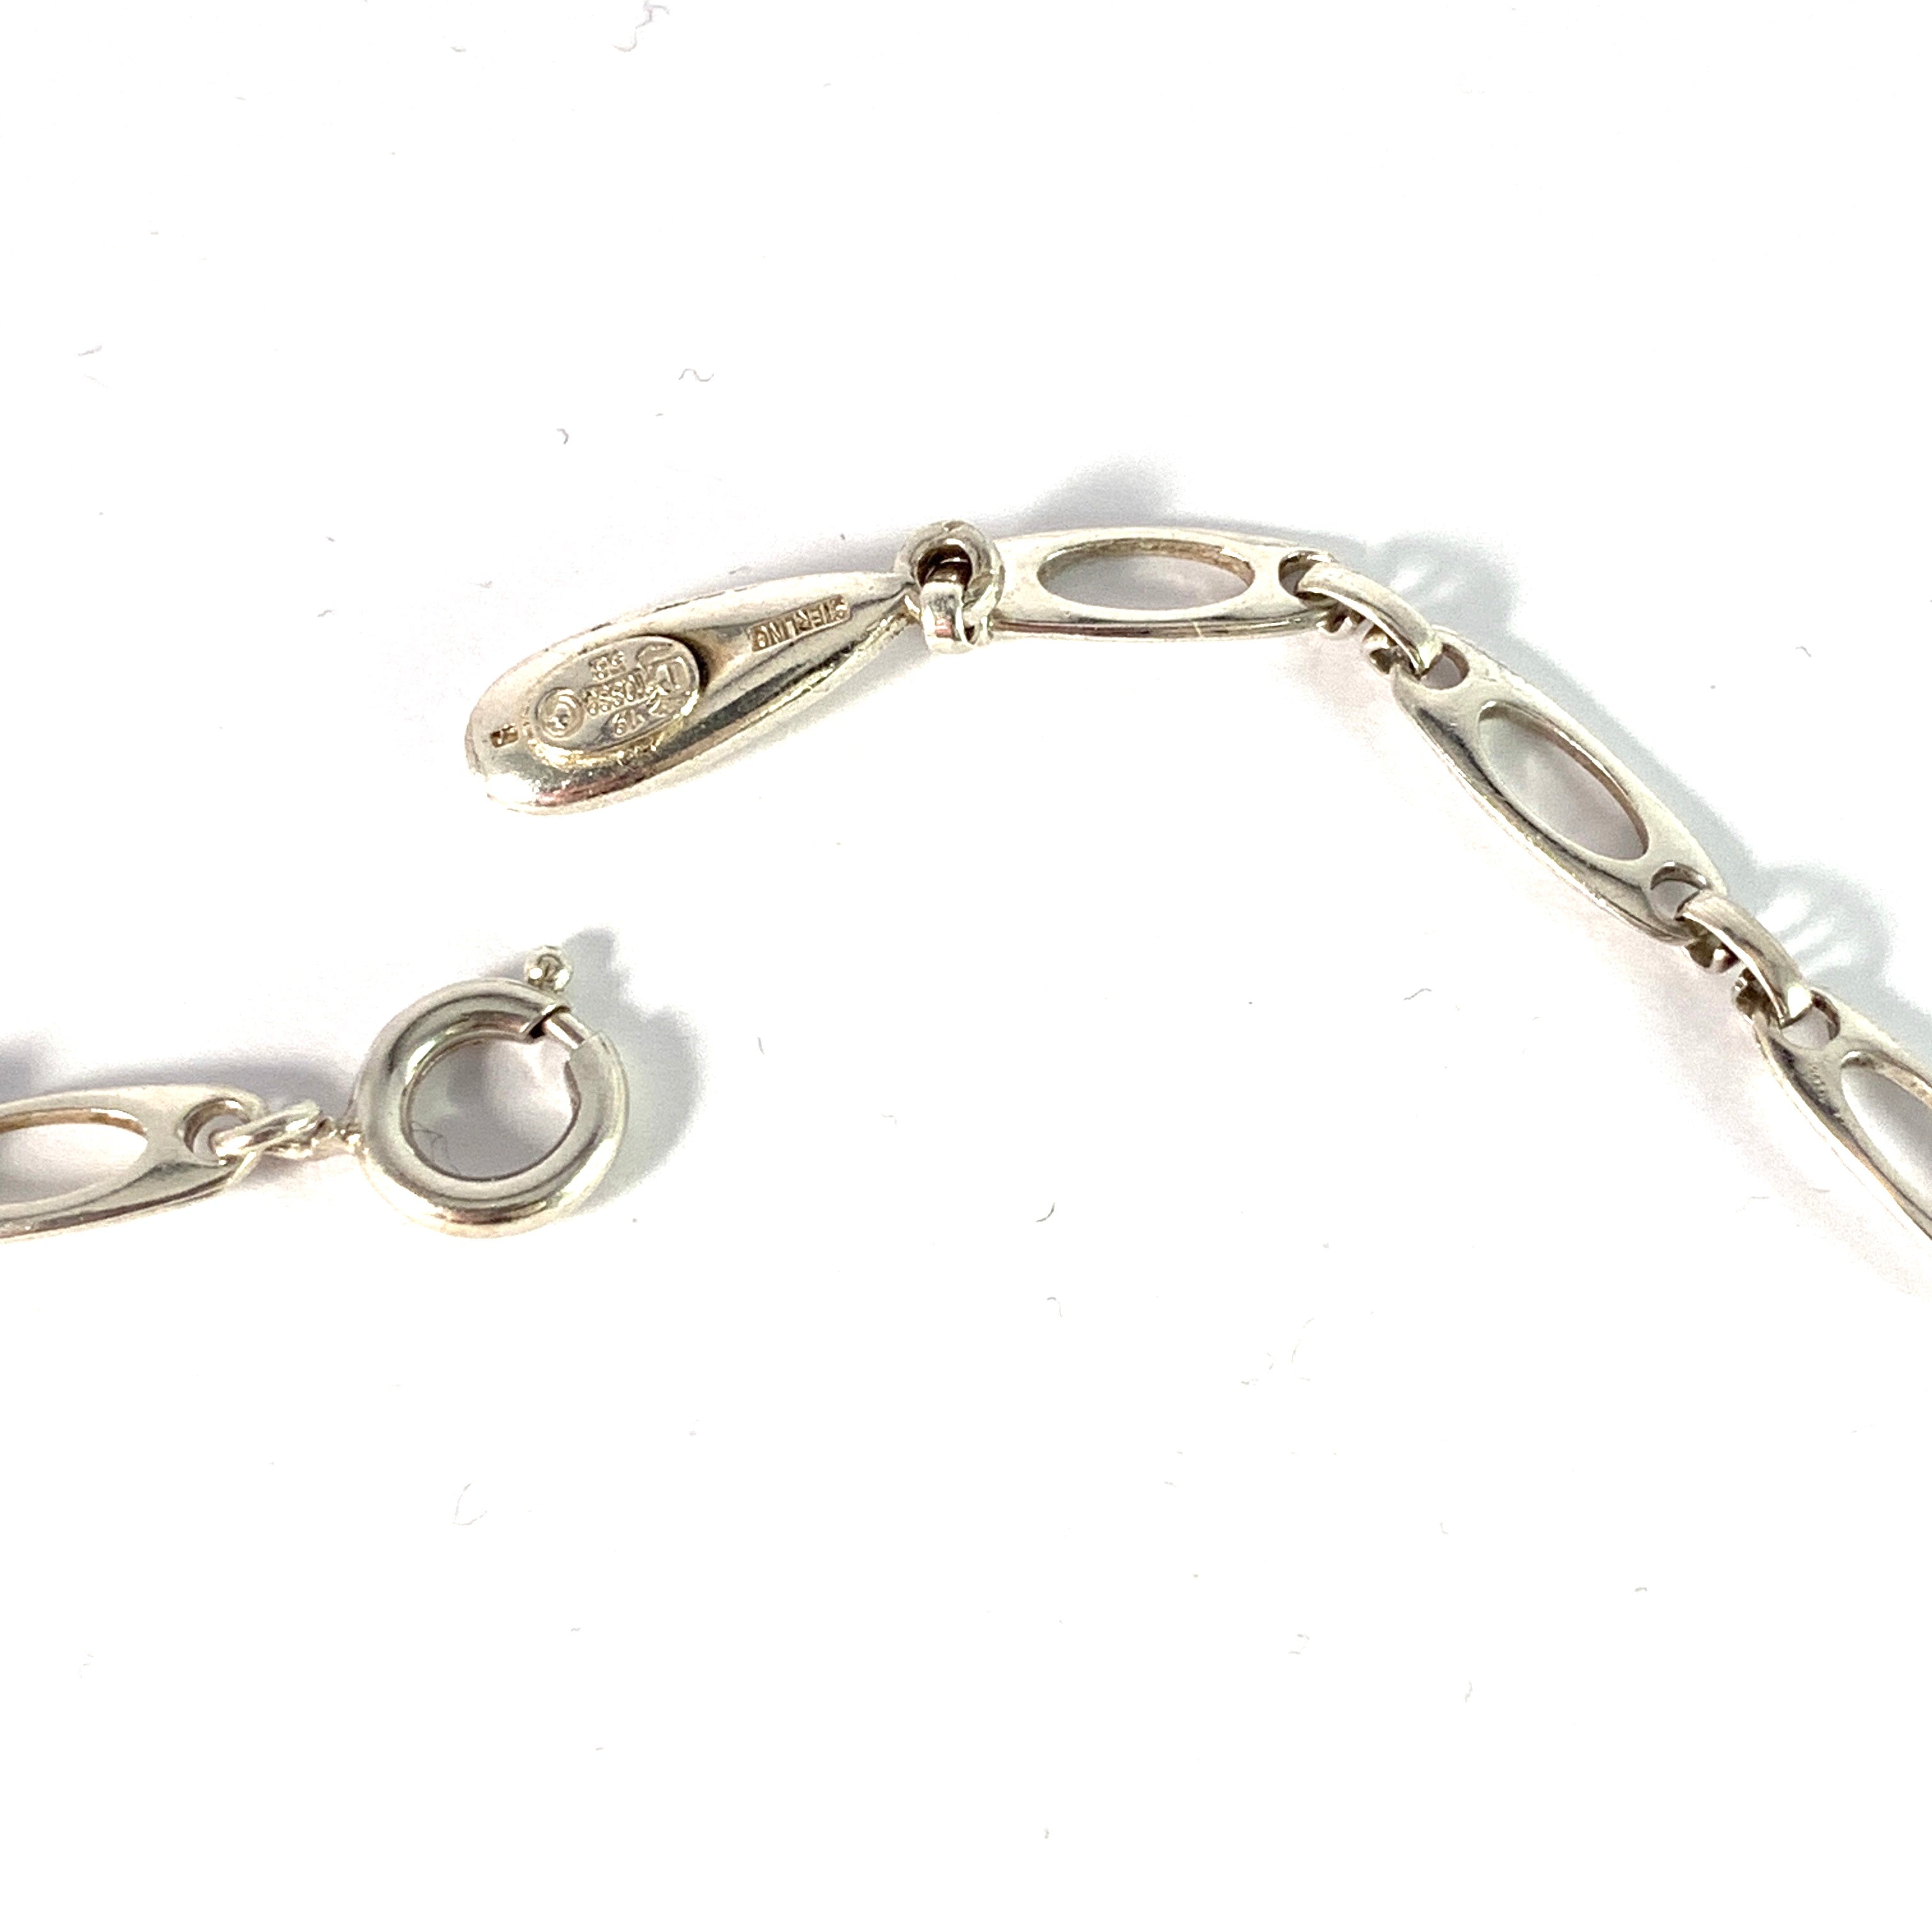 Henkel & Grosse, Germany 1958. Sterling Silver Necklace.